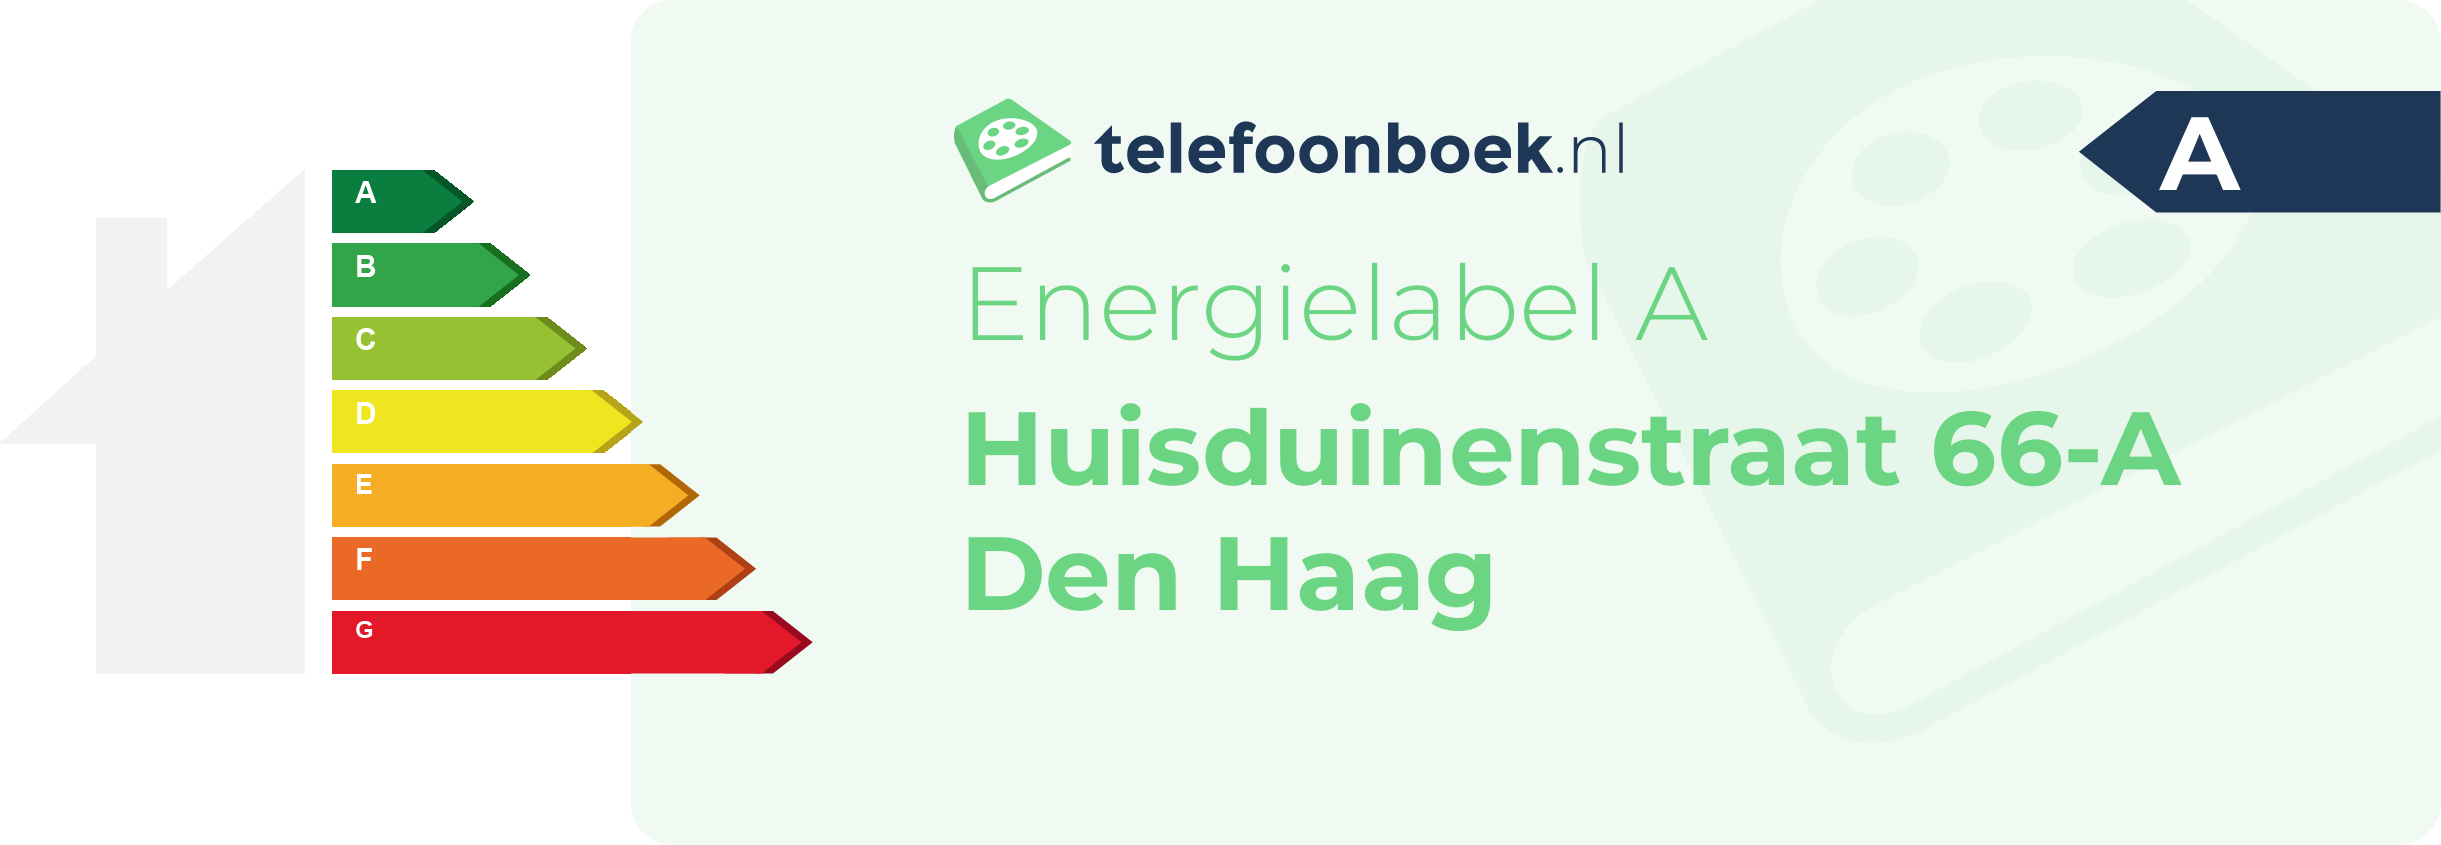 Energielabel Huisduinenstraat 66-A Den Haag